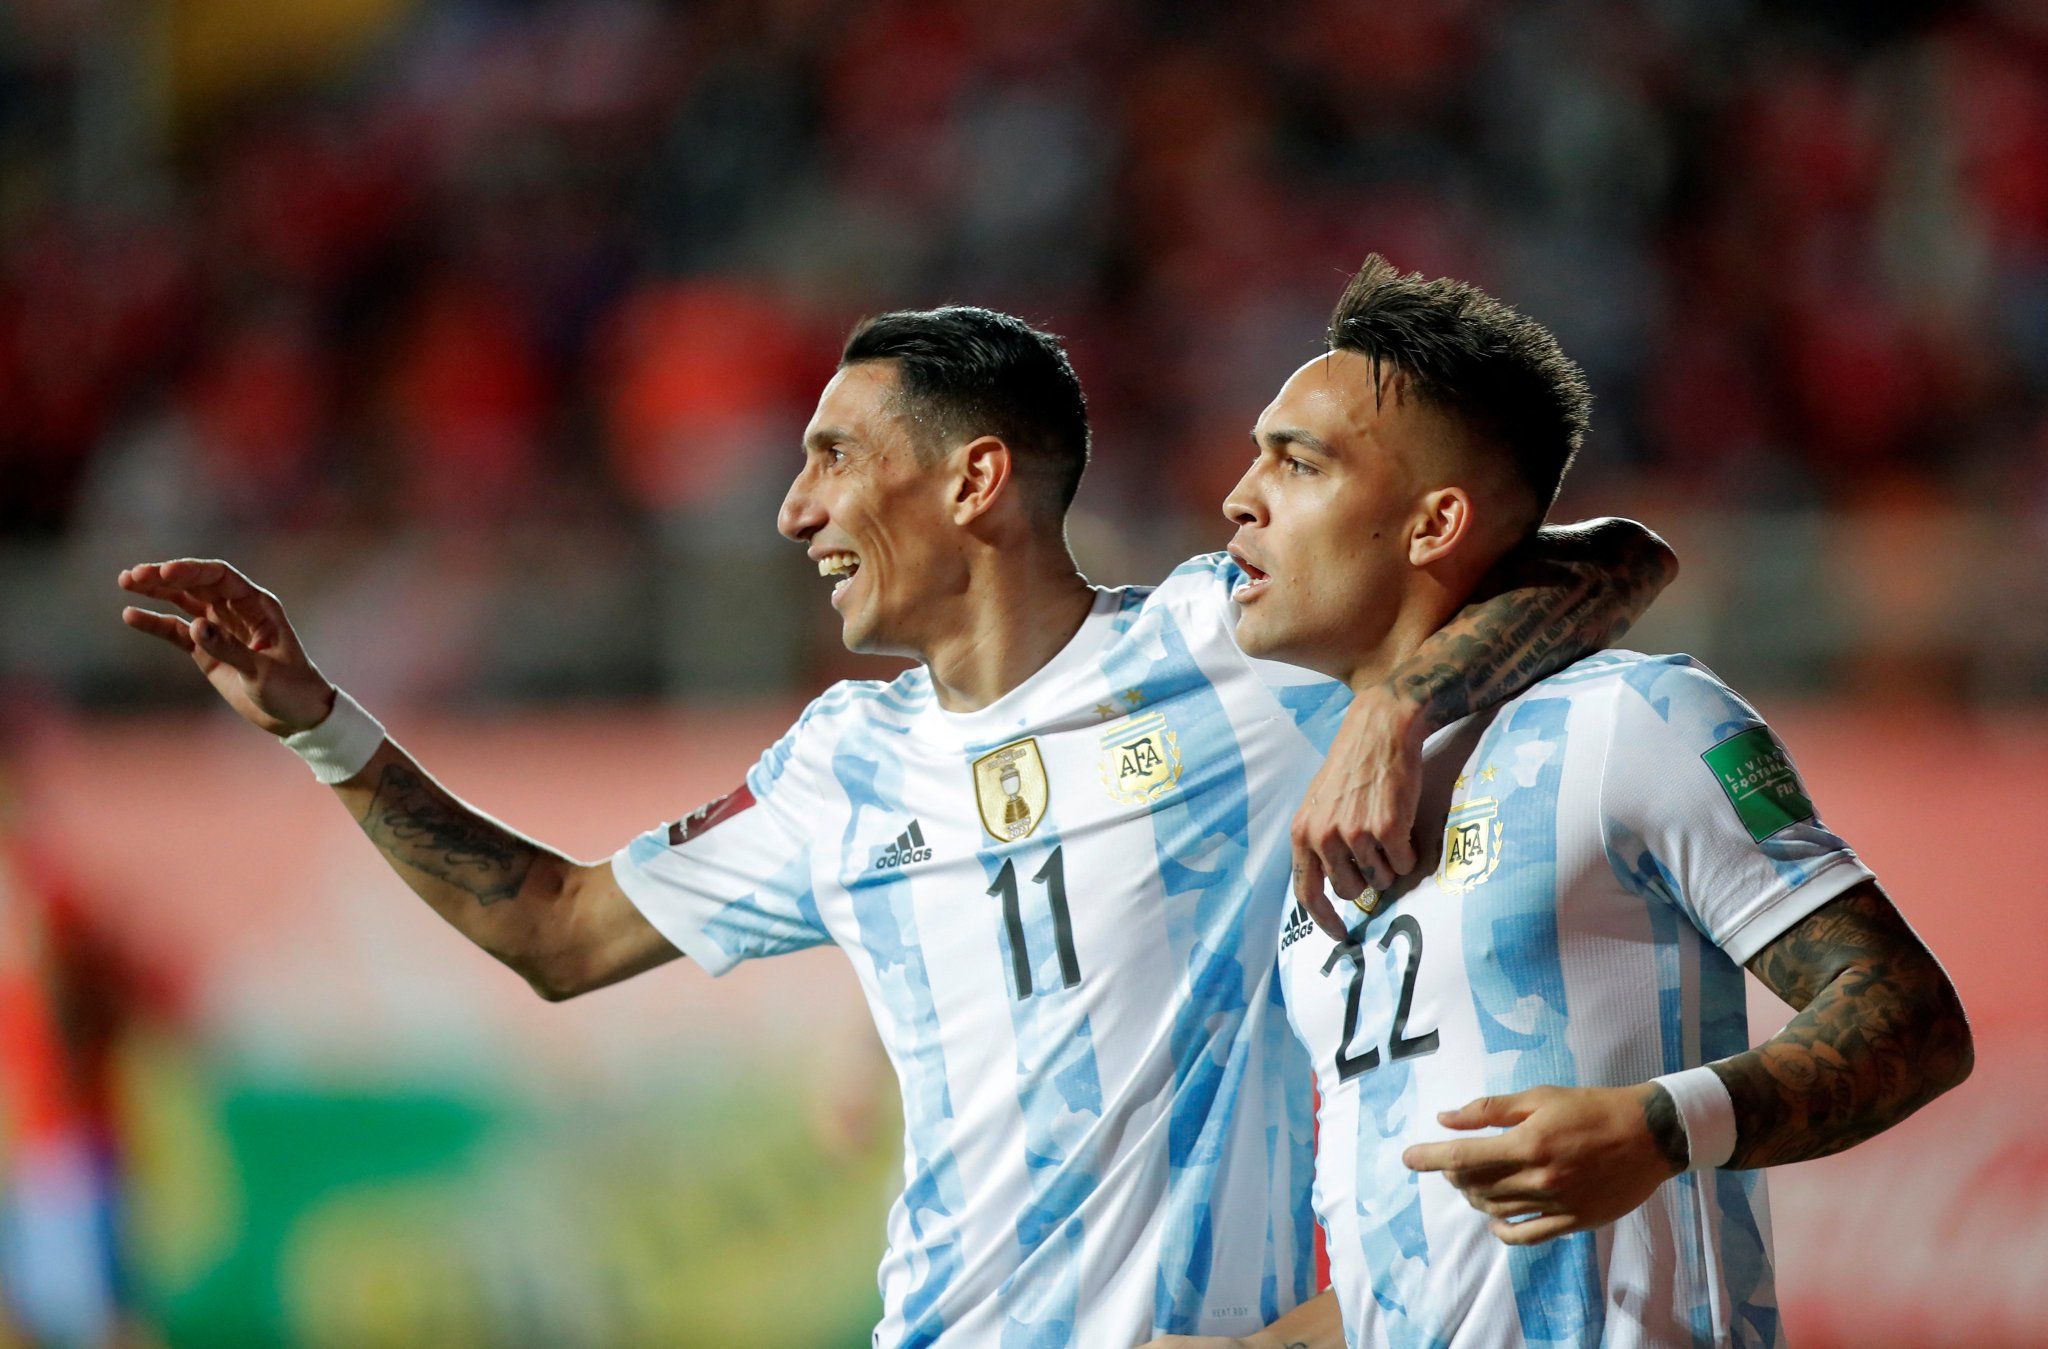 Аргентина — Колумбия прогноз 2 февраля 2022: ставки и коэффициенты на матч отбора к ЧМ-2022